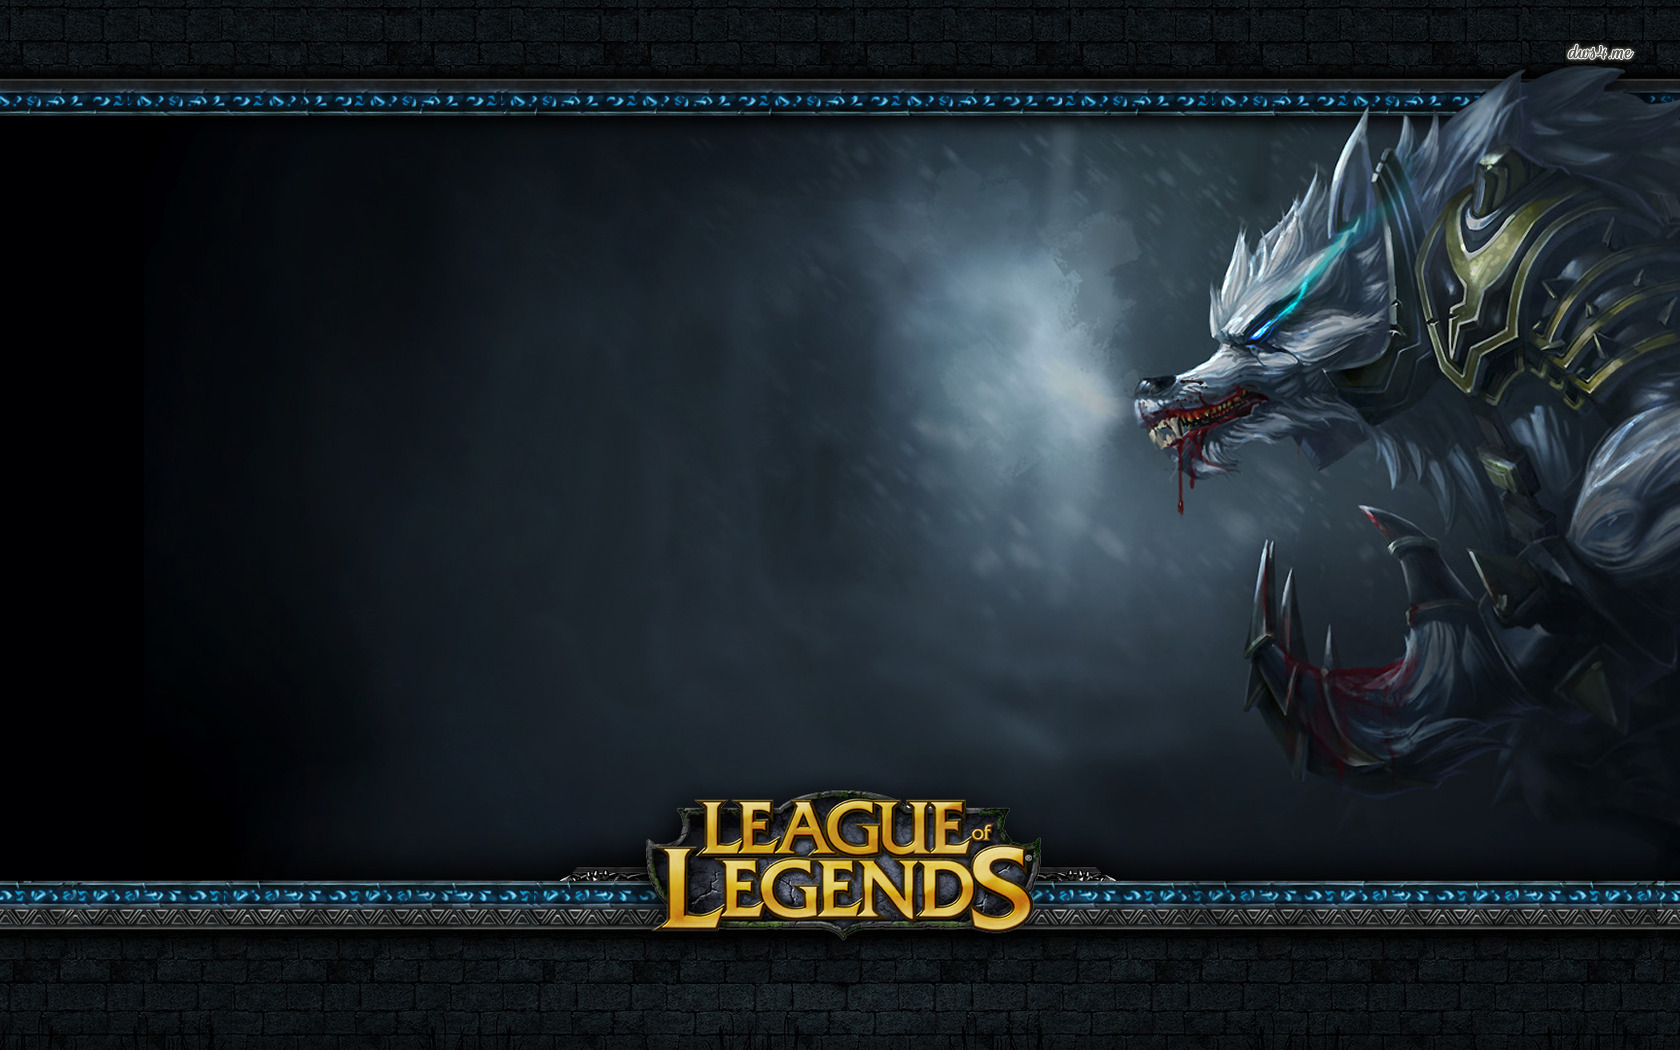  League of Legends  Wallpaper  4K  WallpaperSafari